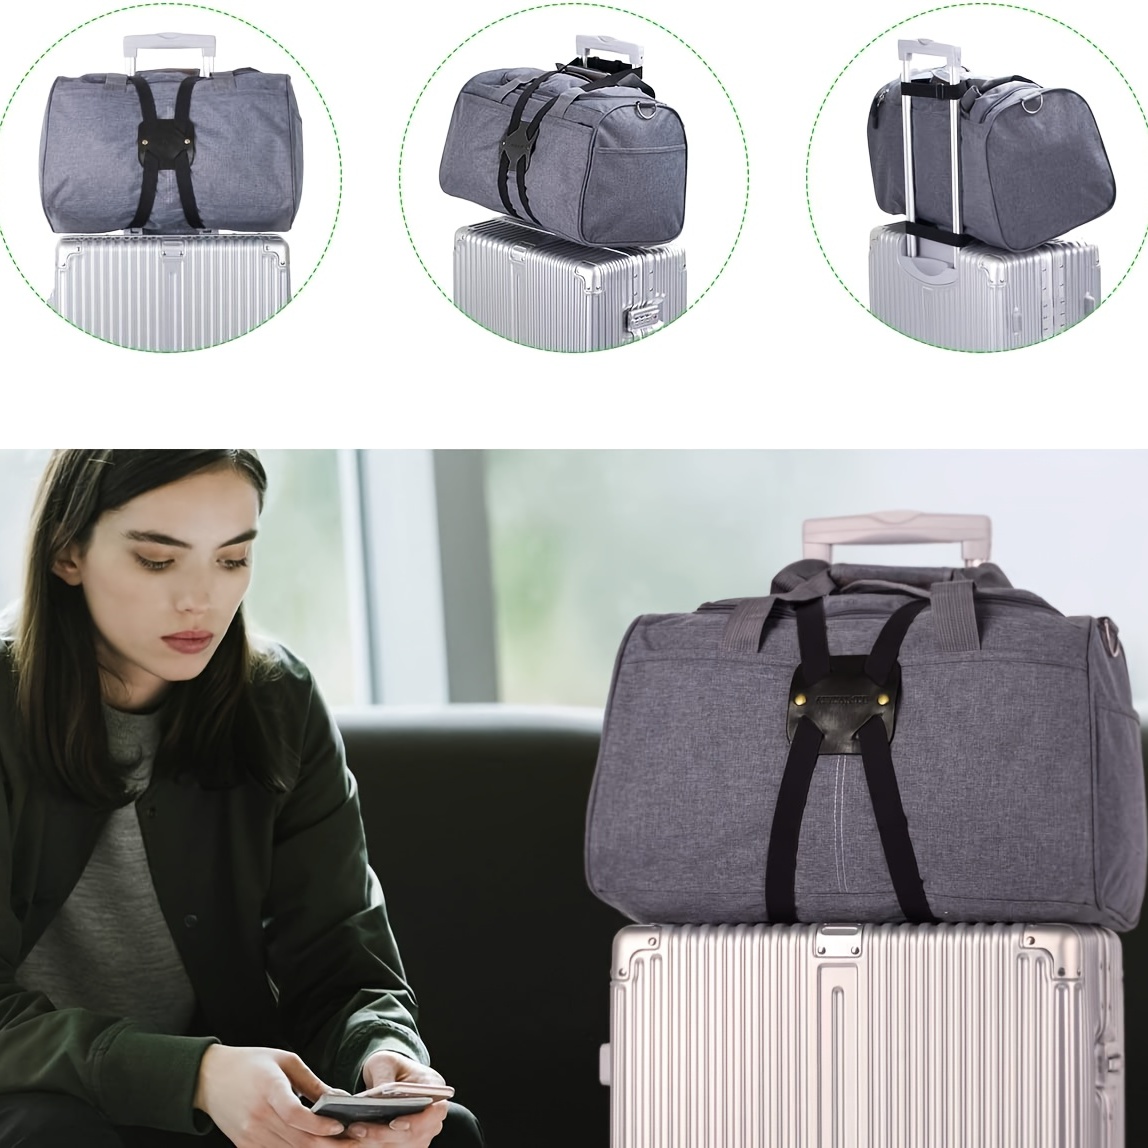  Luggage Straps Bag Bungee, Luggage Bungee - Luggage Straps  Suitcase Adjustable Belt-(Blue-2) : Clothing, Shoes & Jewelry